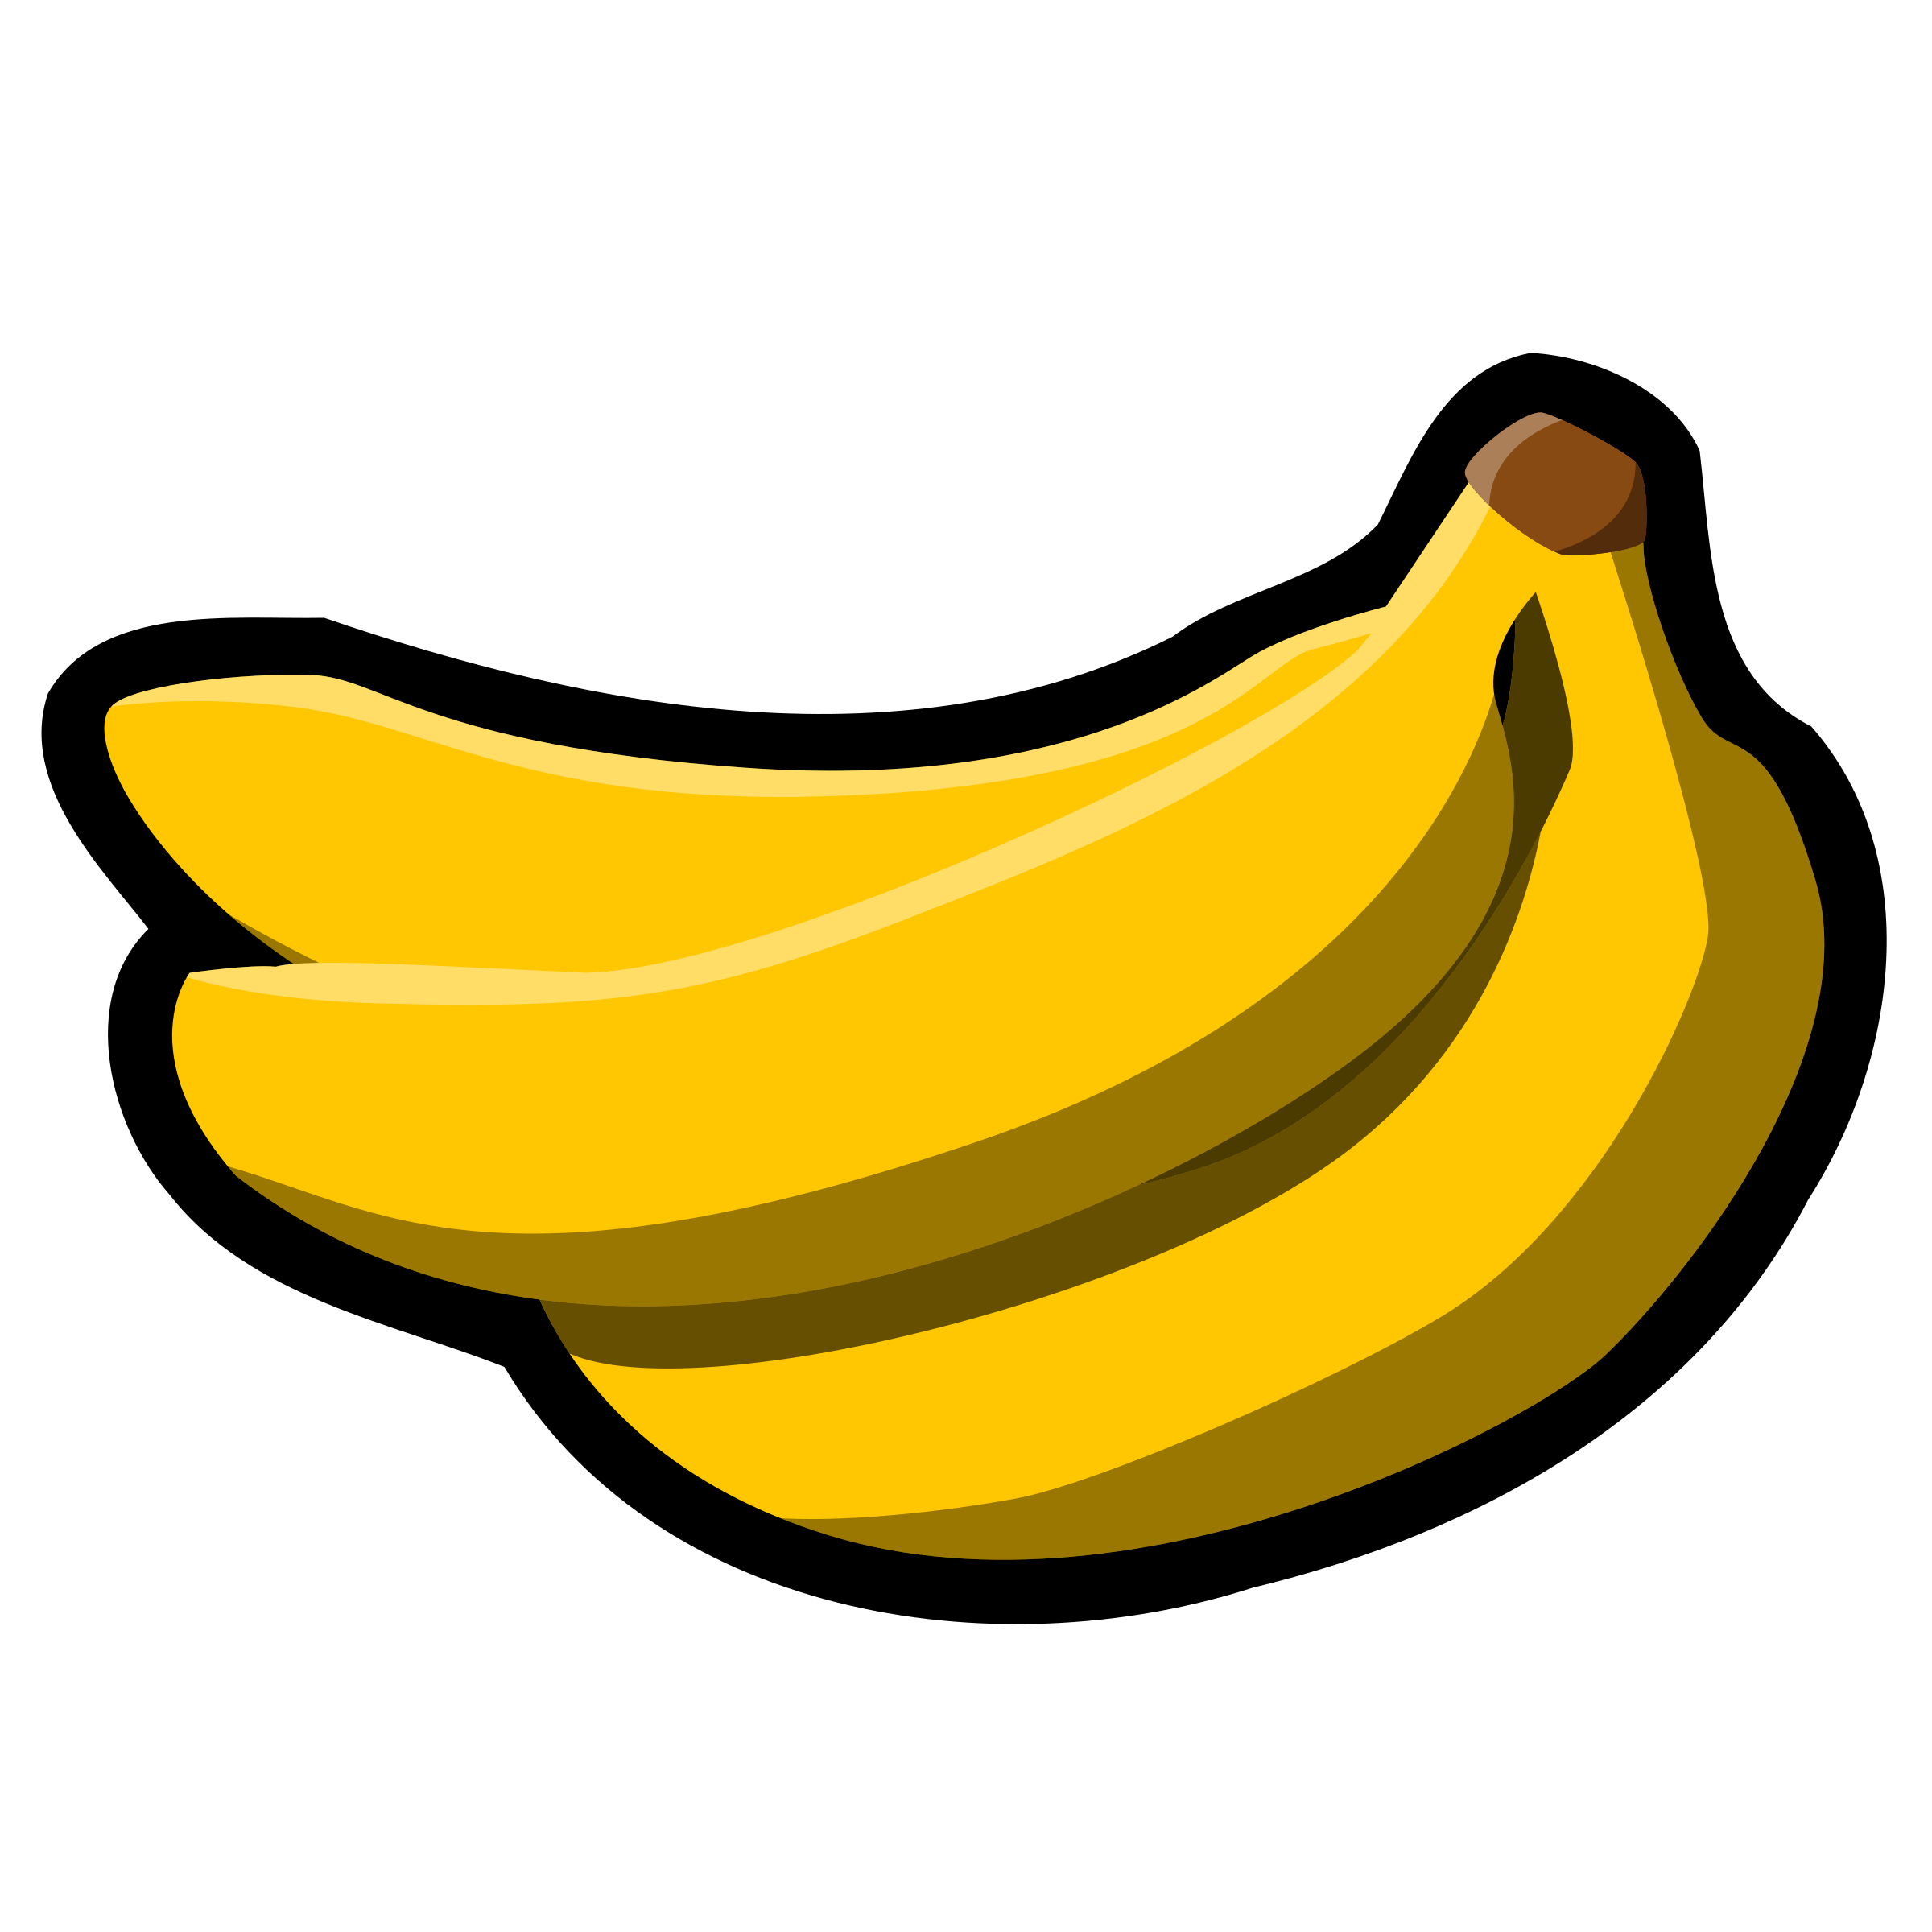 Banana Logo - The Complate Logo Happy Banana by R A H A J O E on